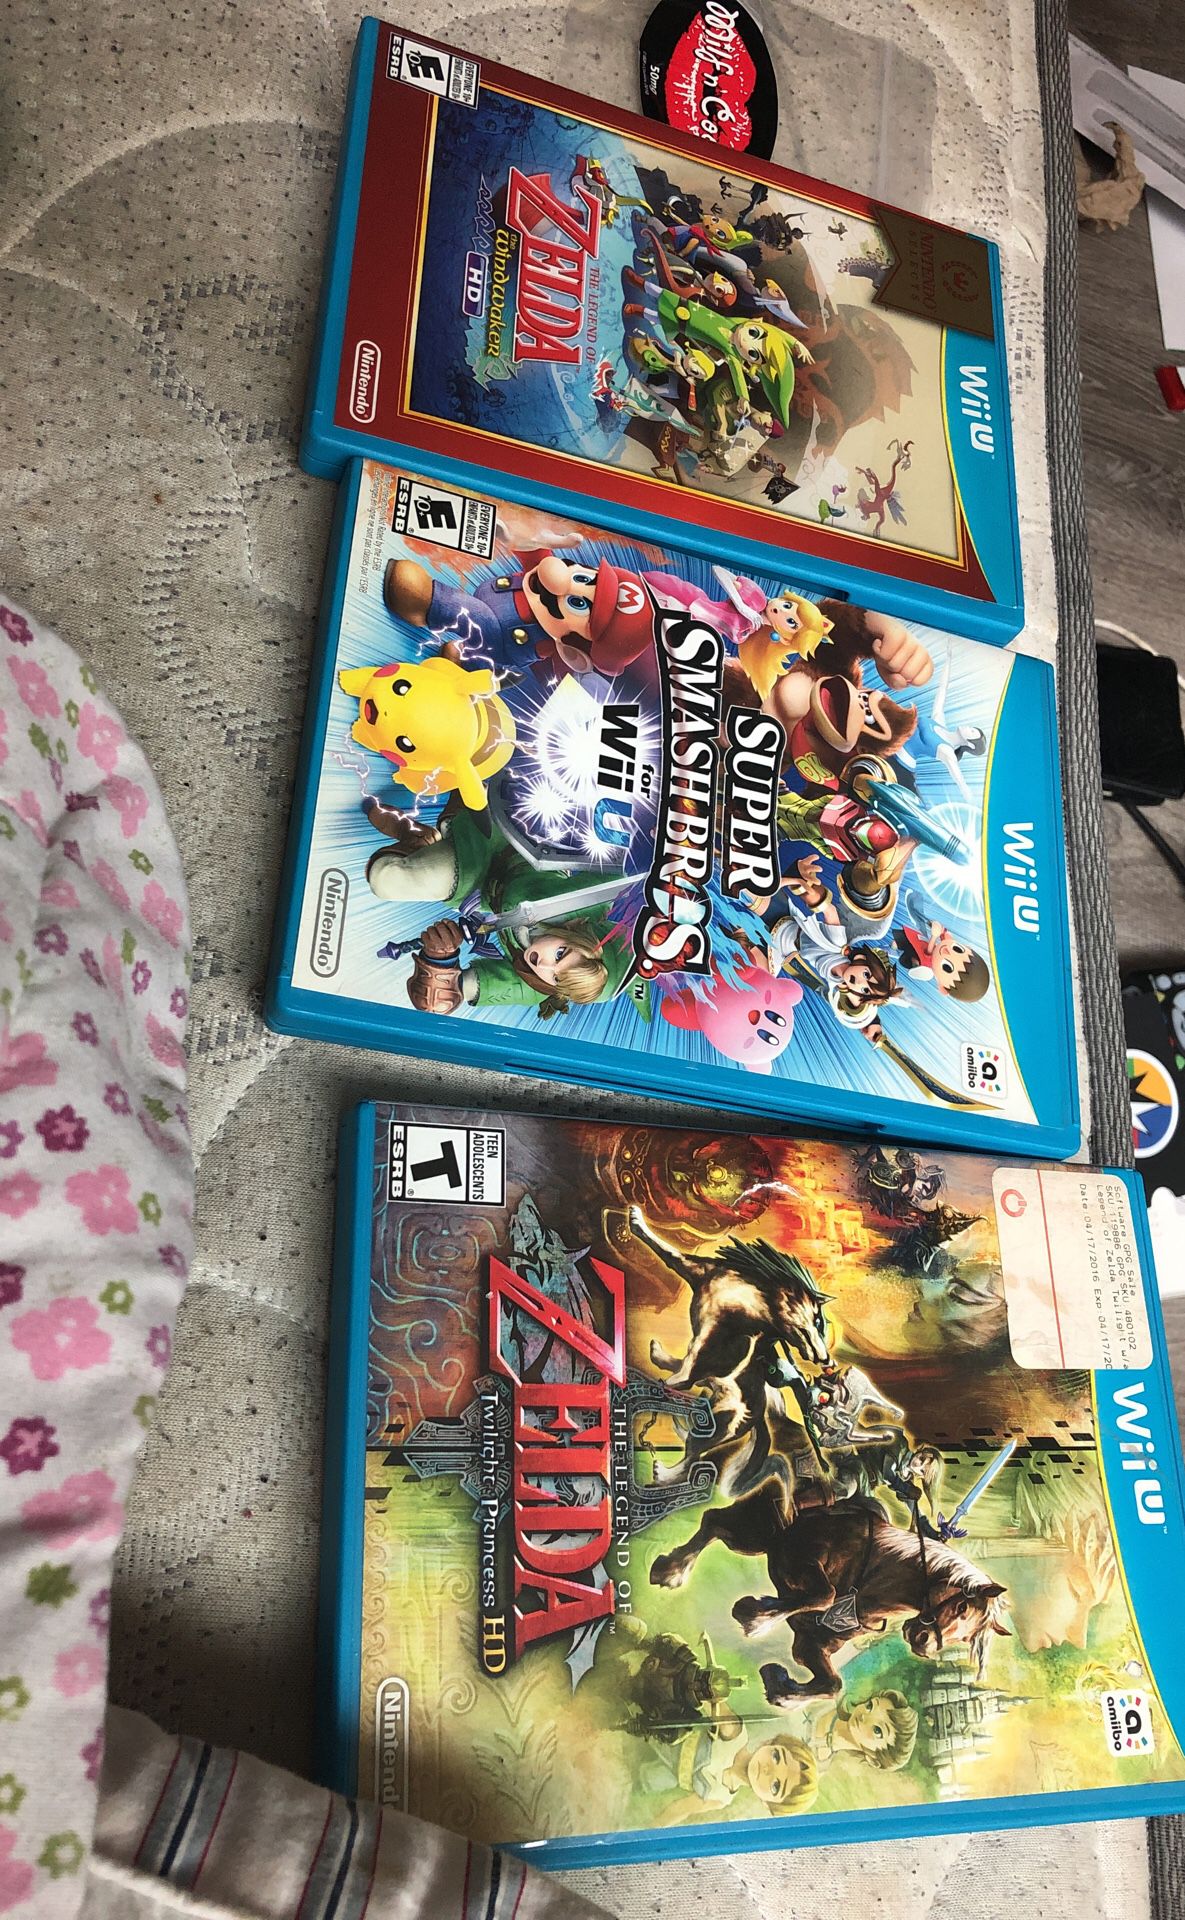 Nintendo Wii U and Games